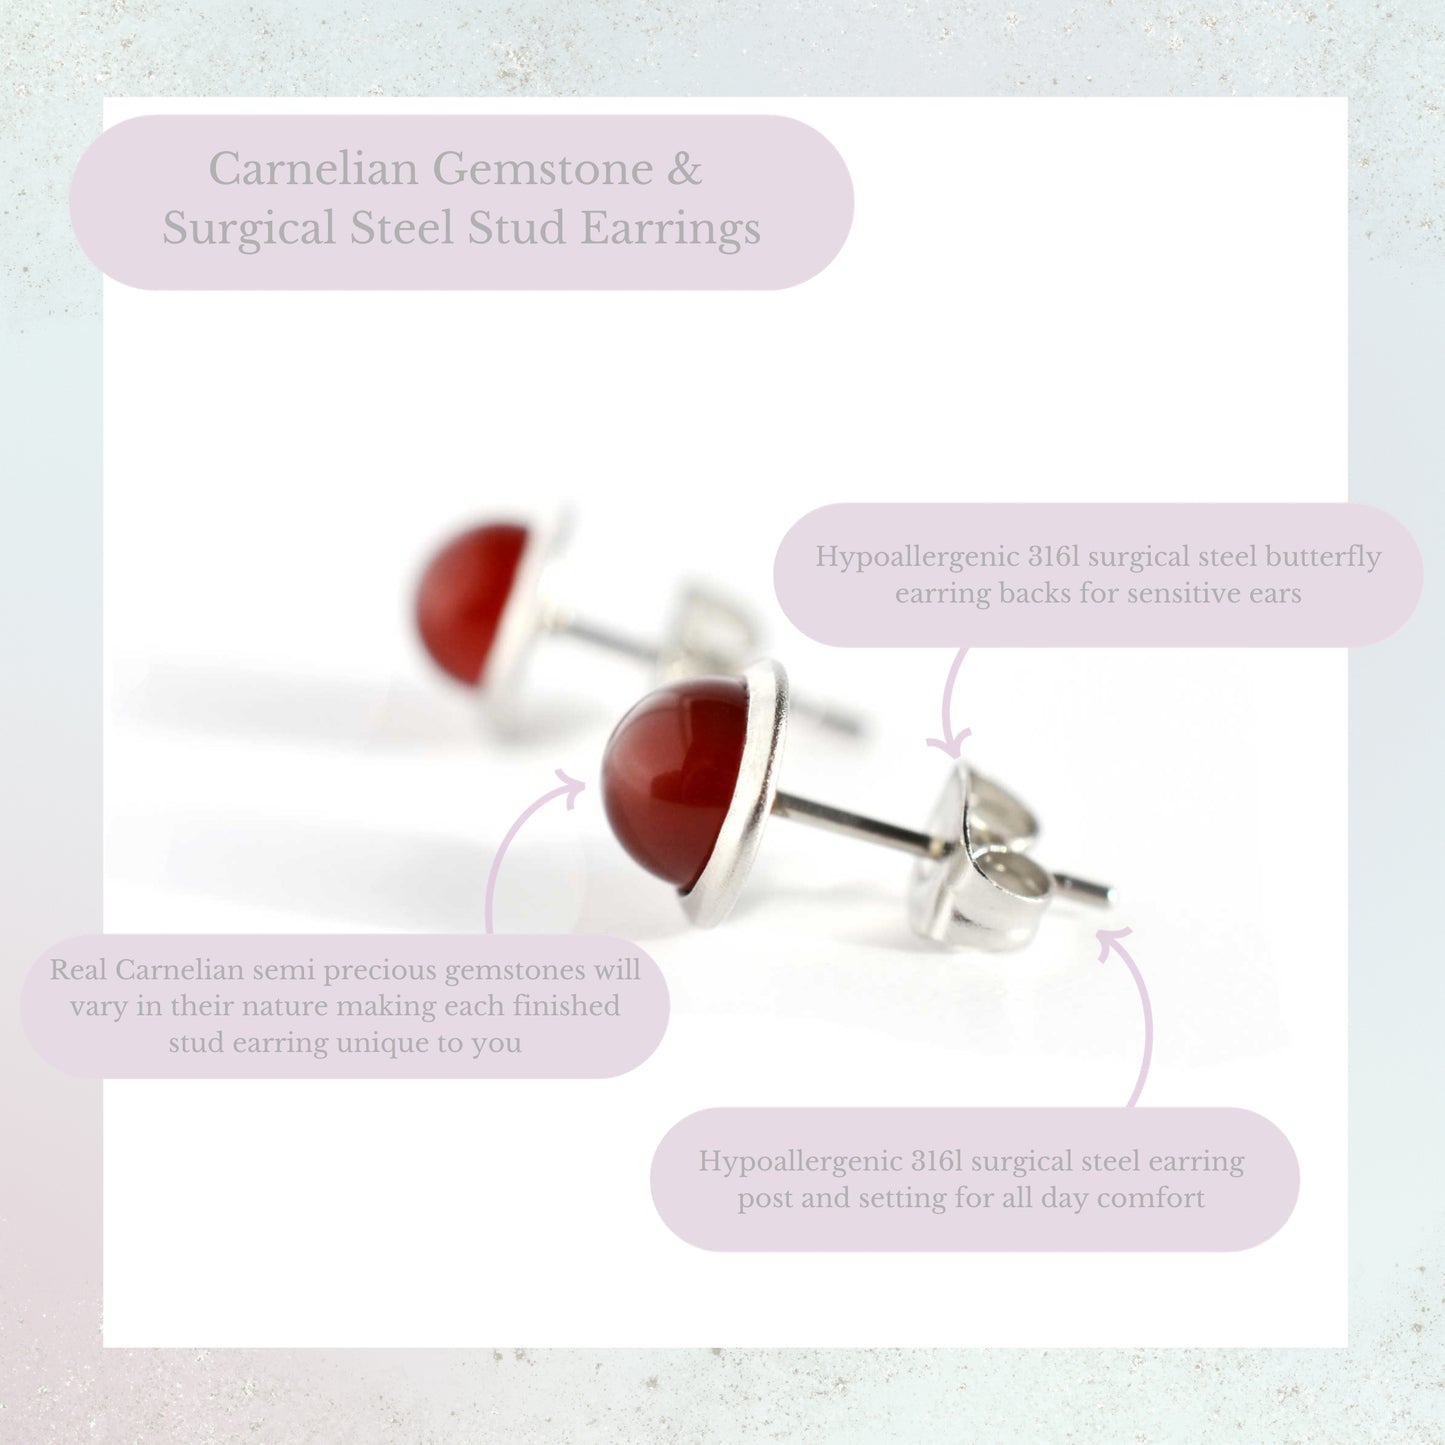 Carnelian Gemstone & Surgical Steel Stud Earrings Product Information Graphic